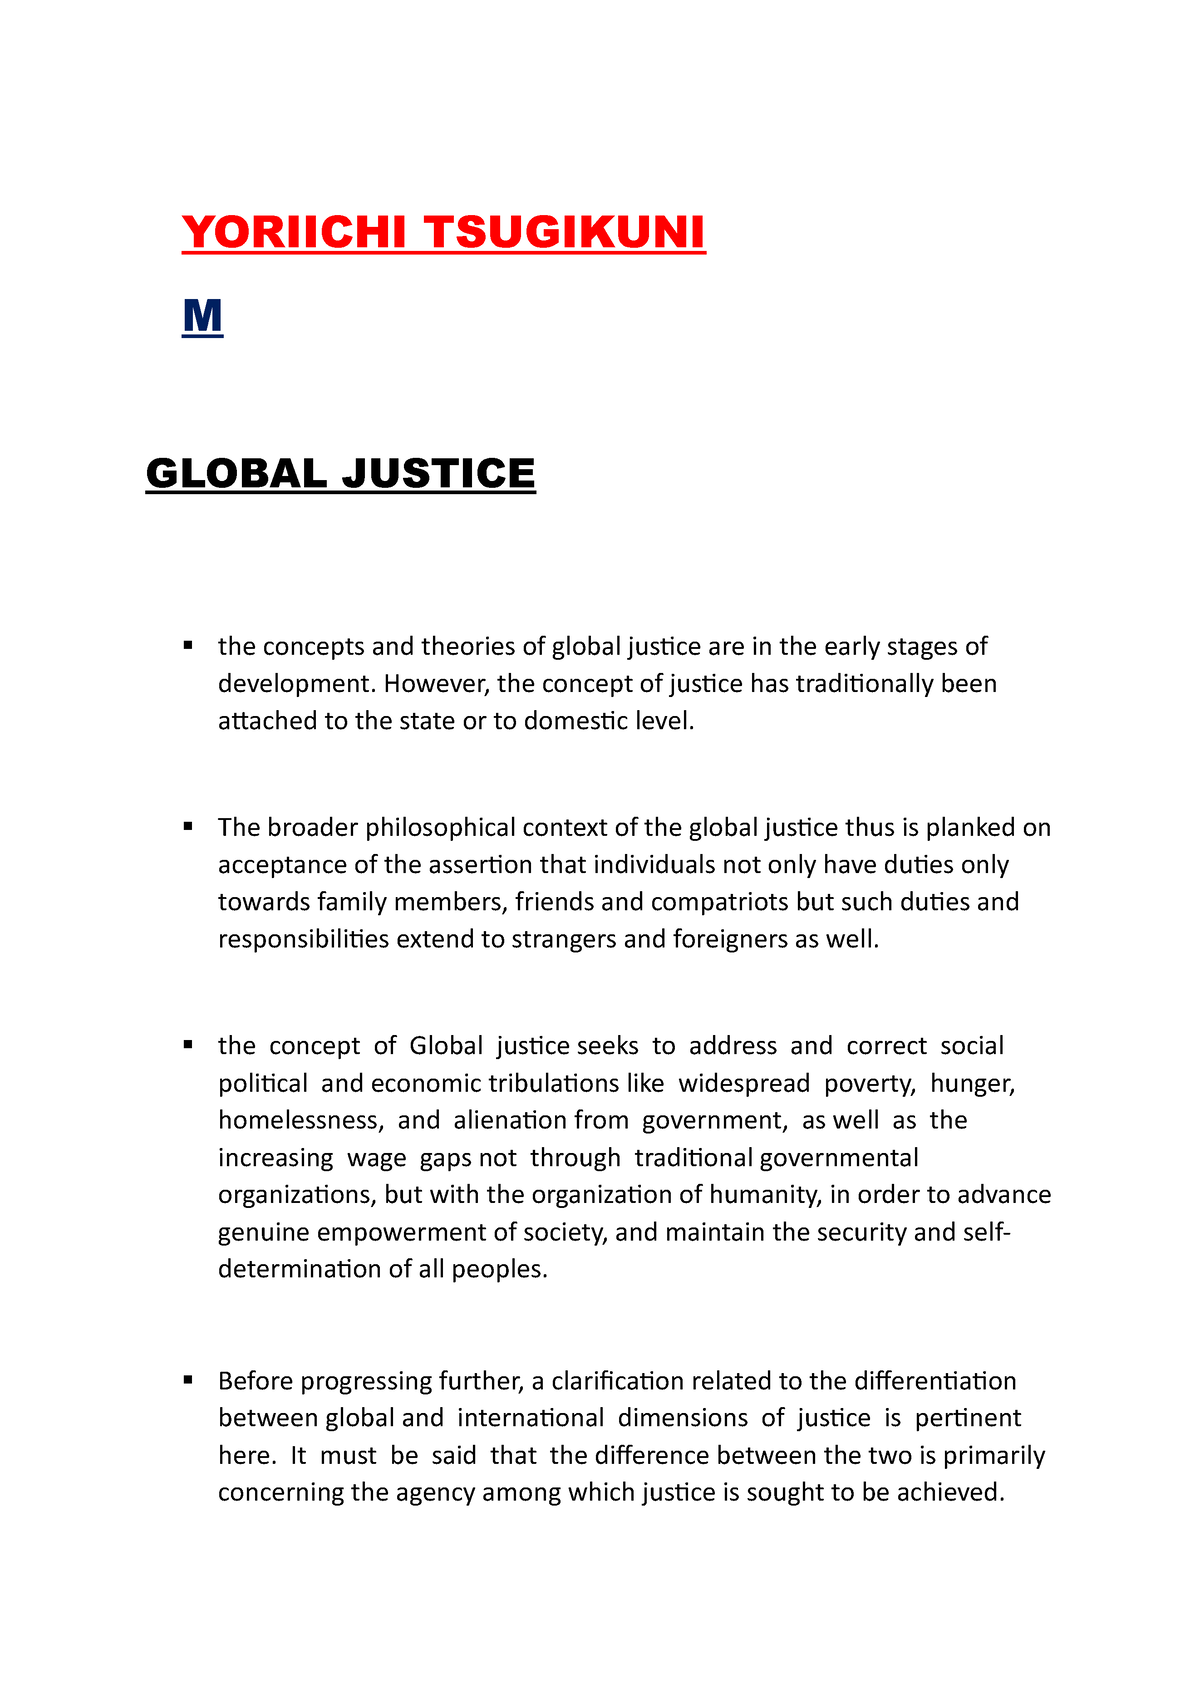 global justice essay